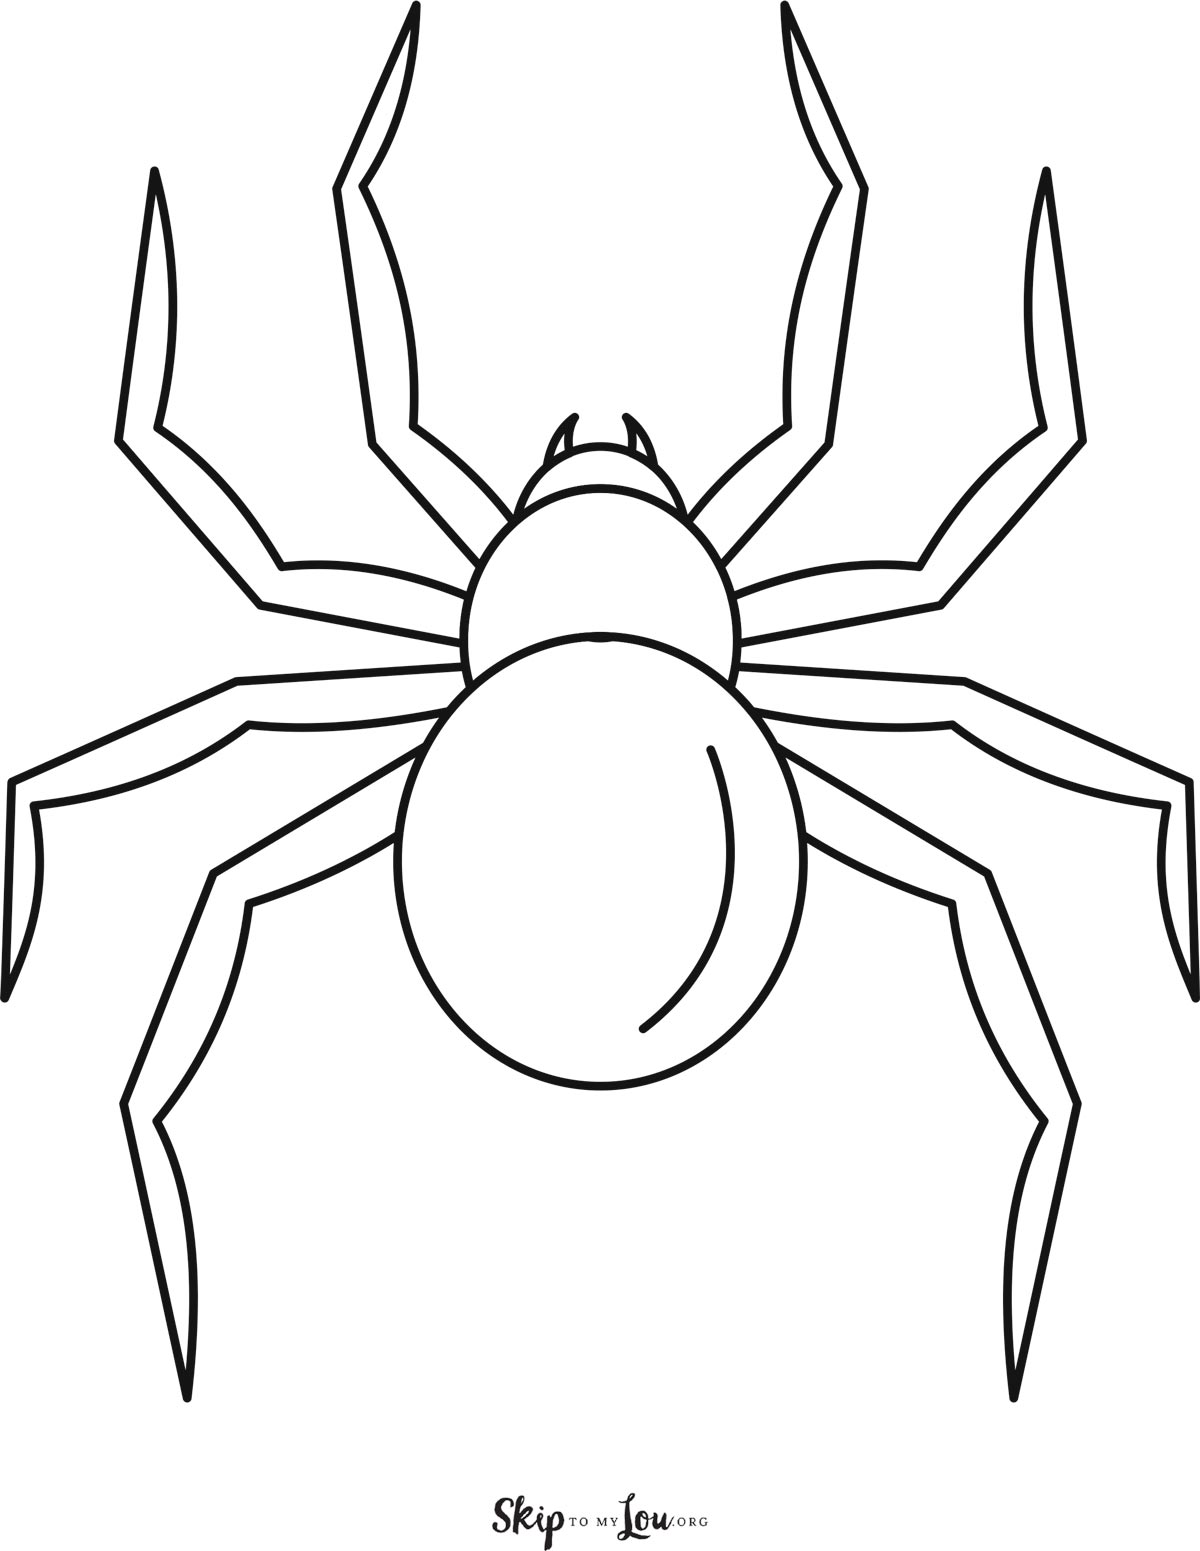 Halloween template - 9 spider template